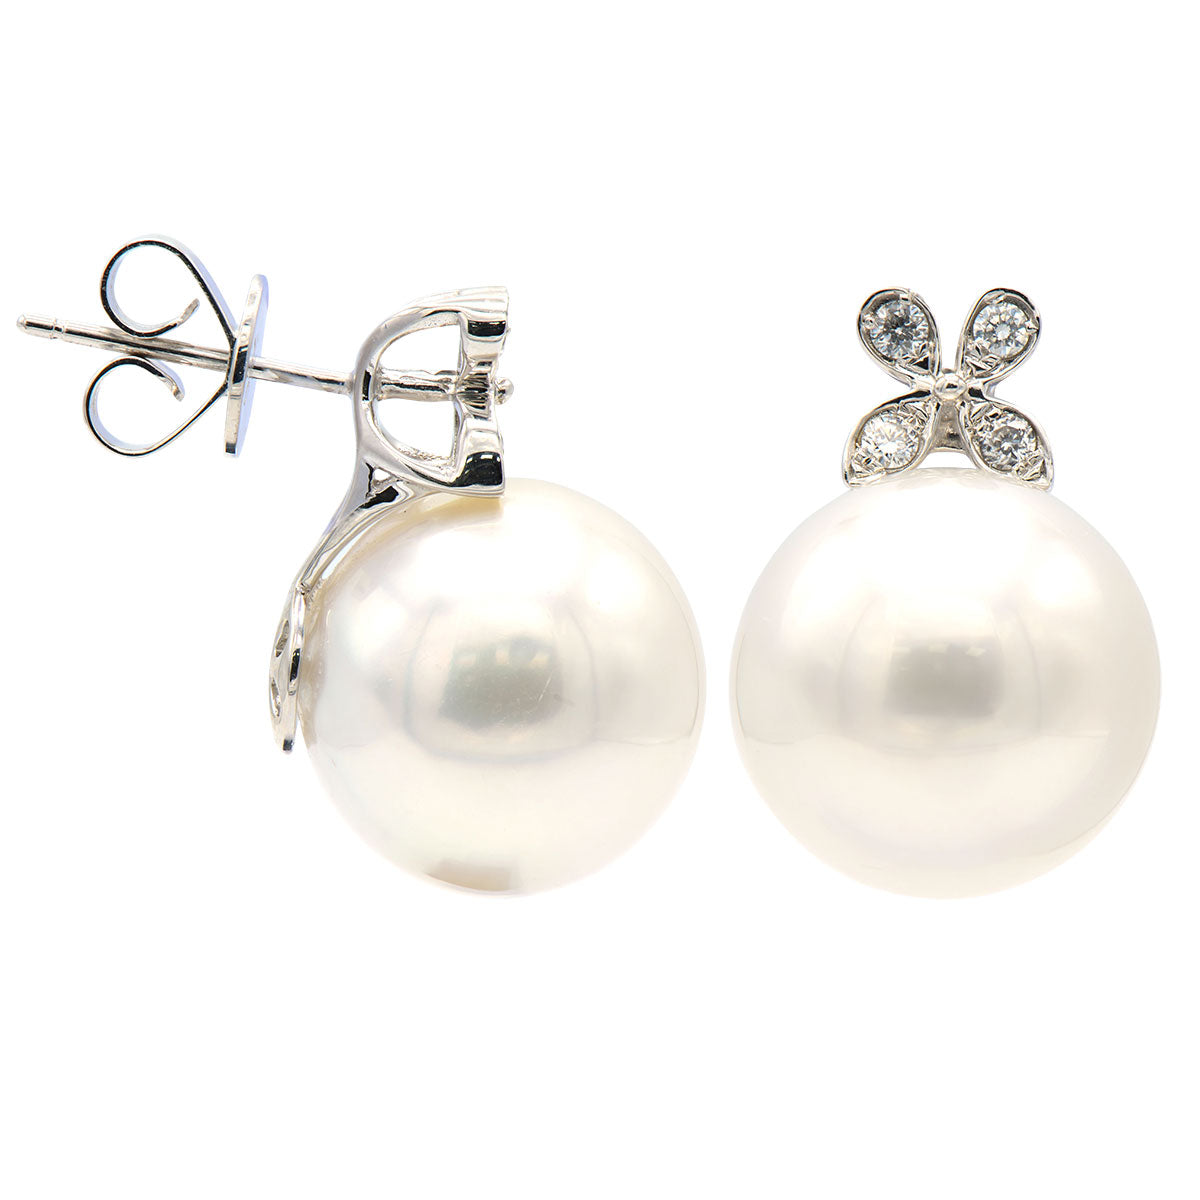 18KW White South Sea Pearl Earrings, 13-14mm